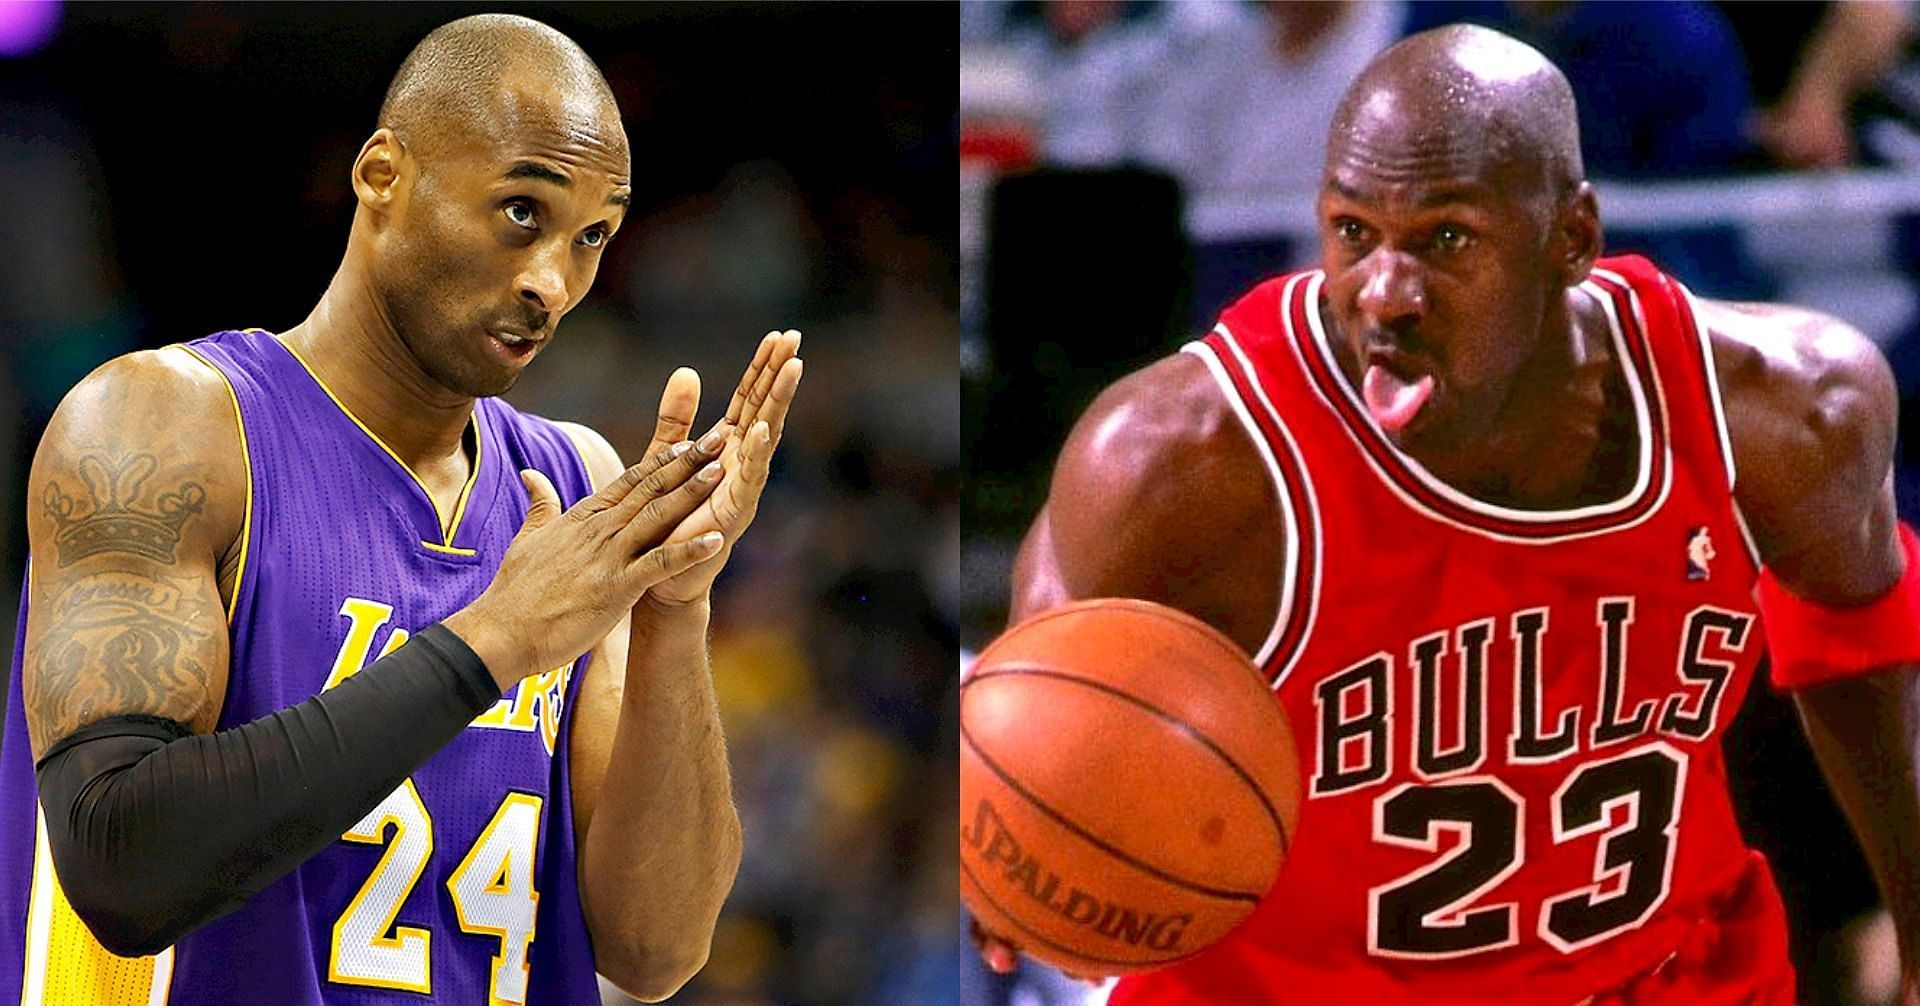 LA Lakers legend Kobe Bryant and Chicago Bulls legend Michael Jordan